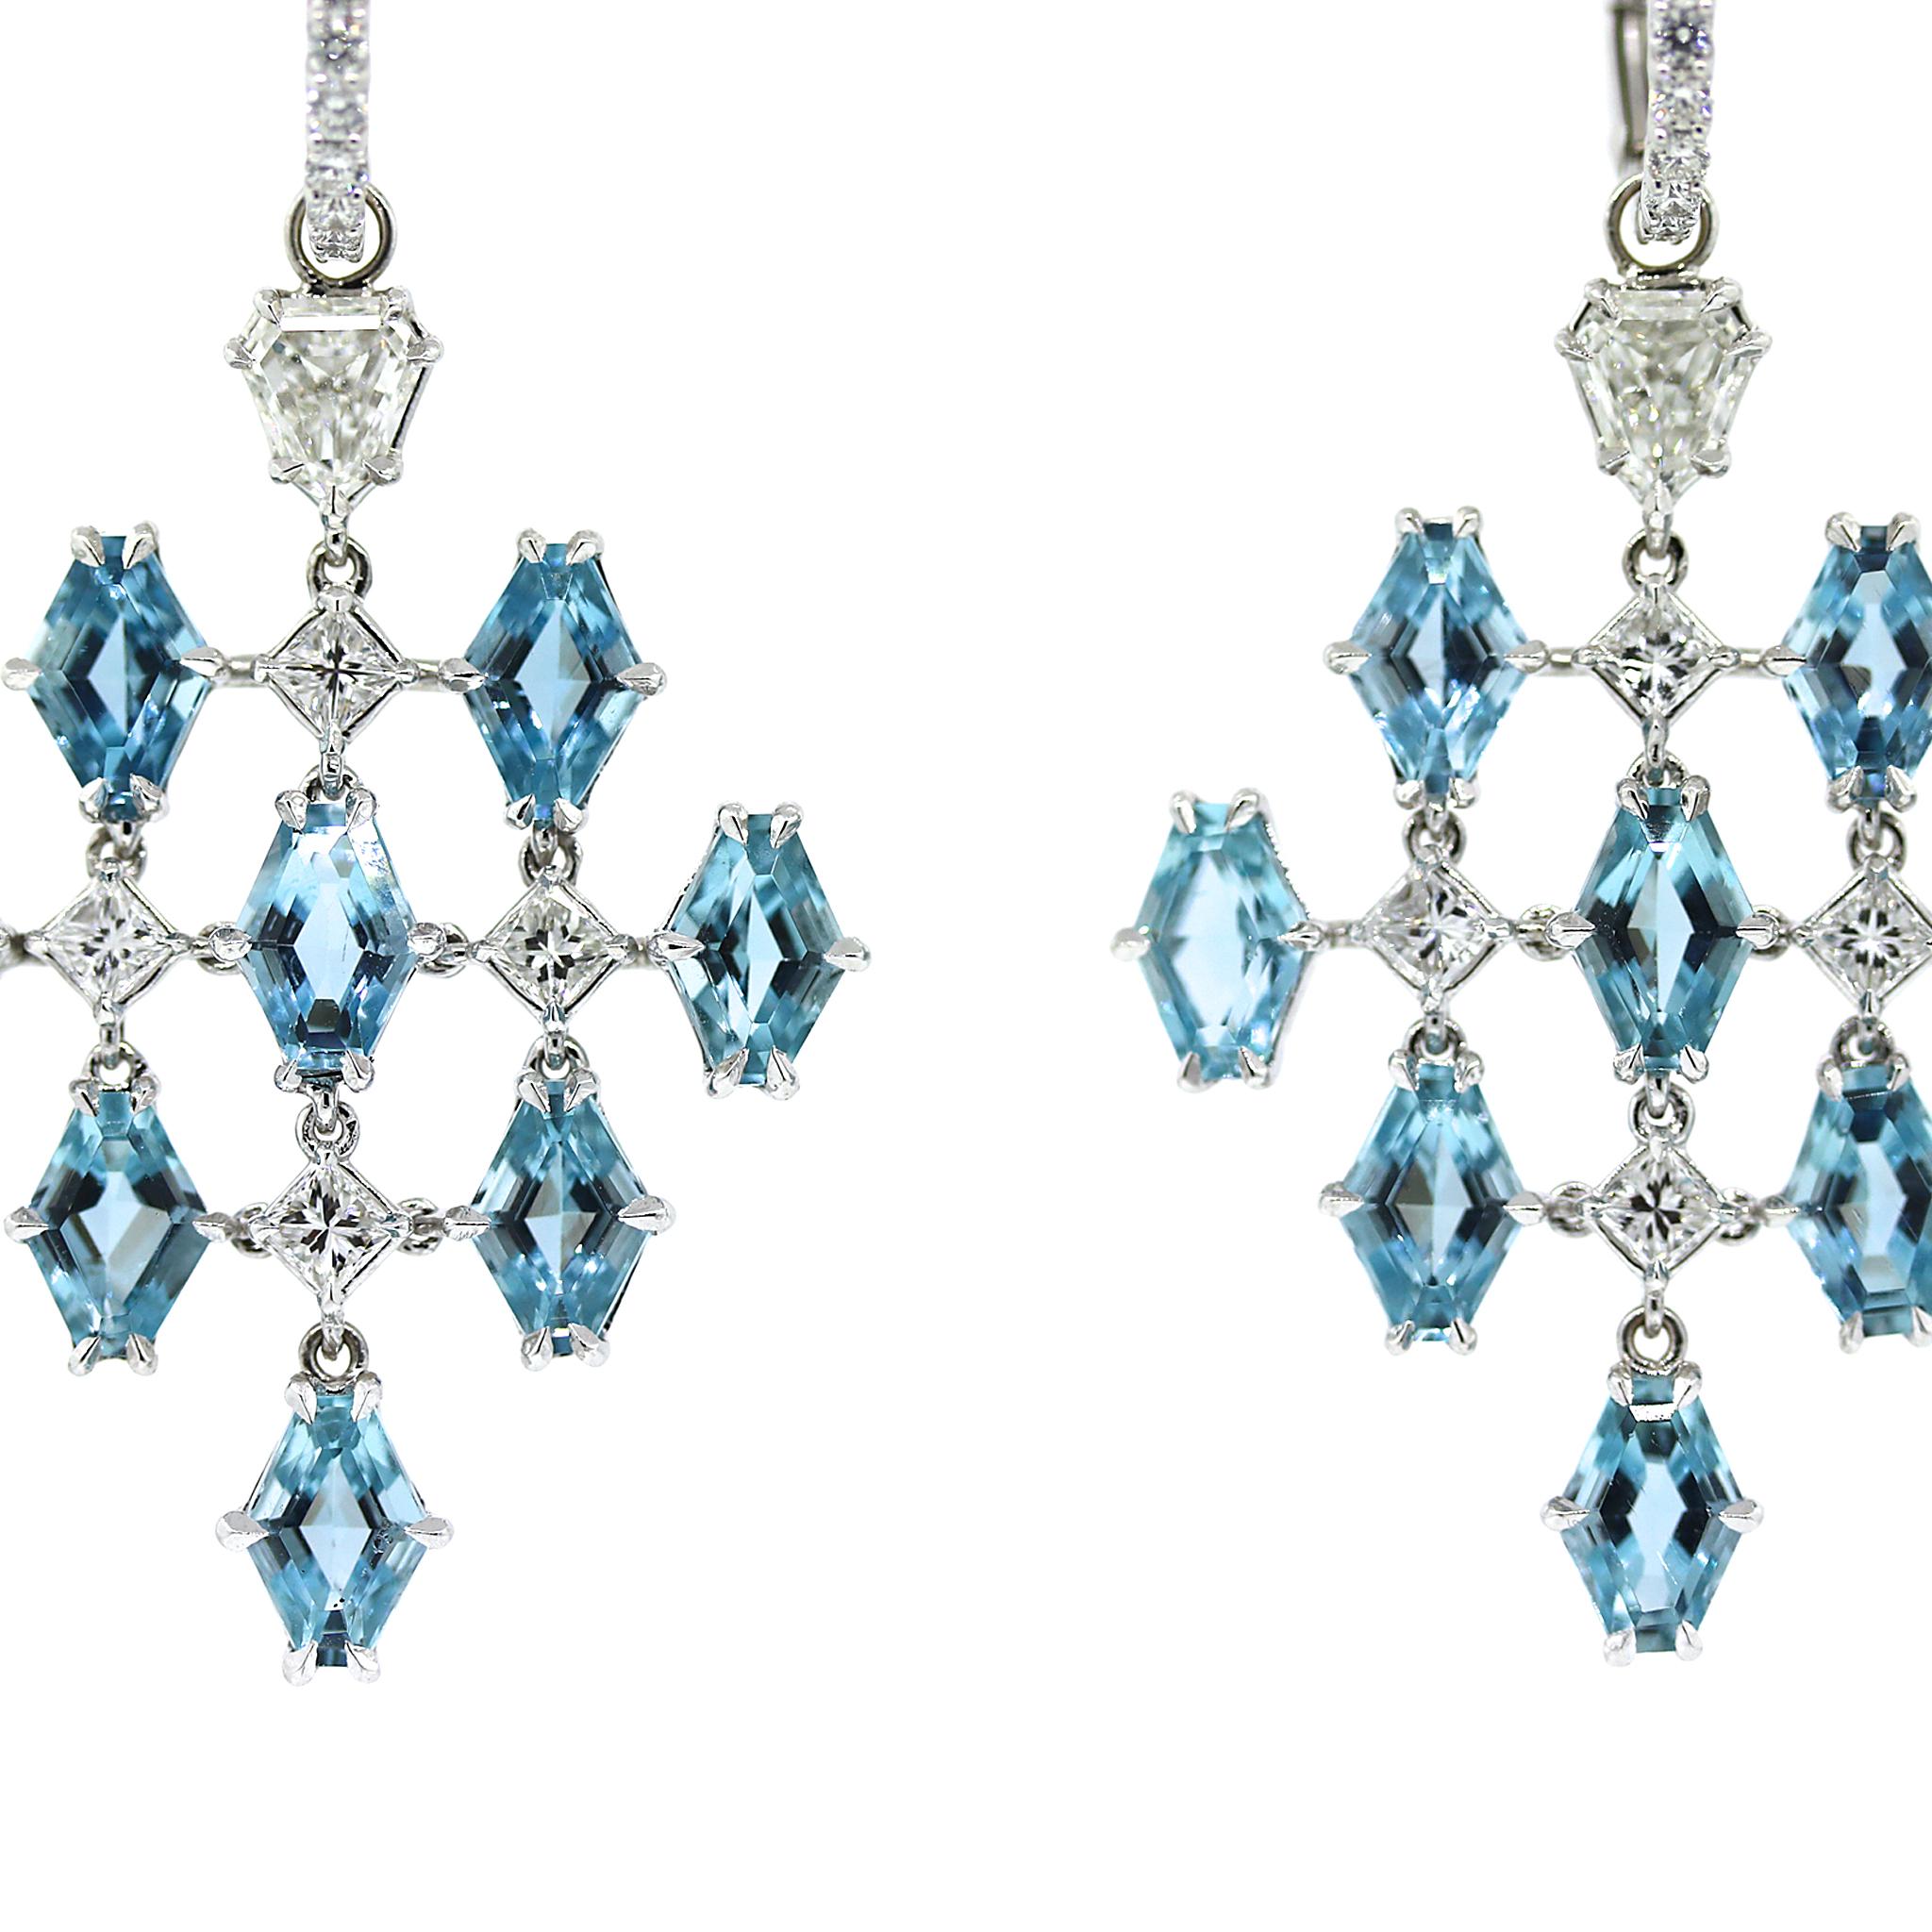 Mixed Cut Lugano Aquamarine and Diamond 18k White Gold Earrings For Sale